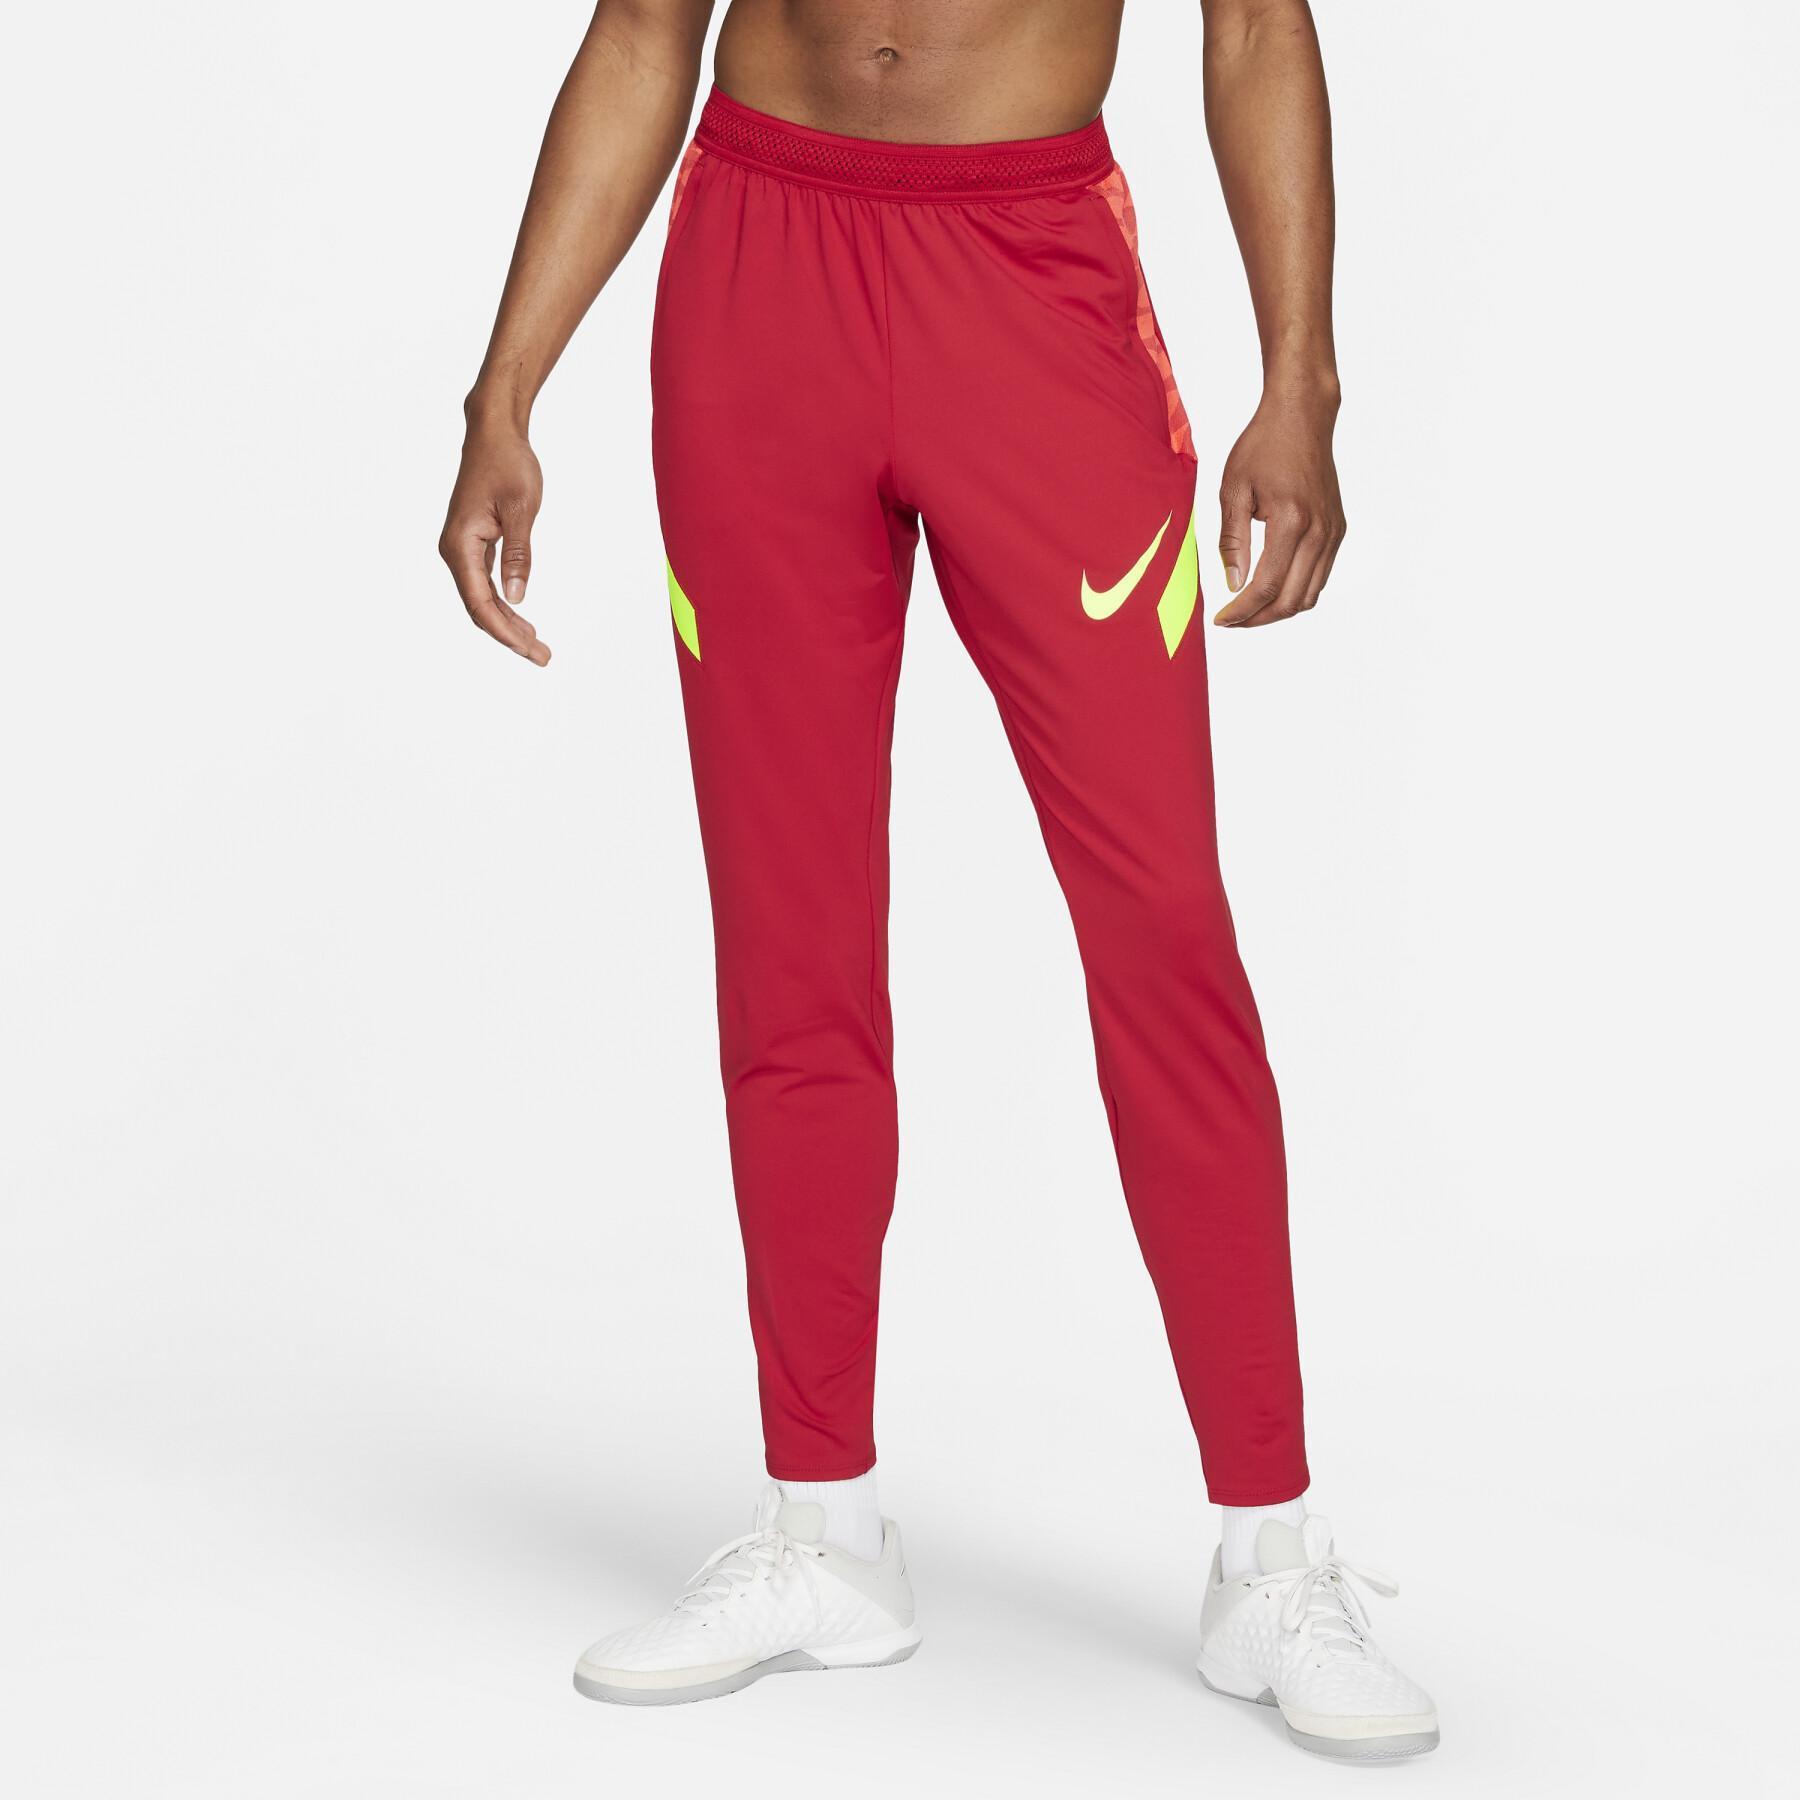 Pantalon survêtement Femme Nike Strike rouge jaune 2021/22 sur